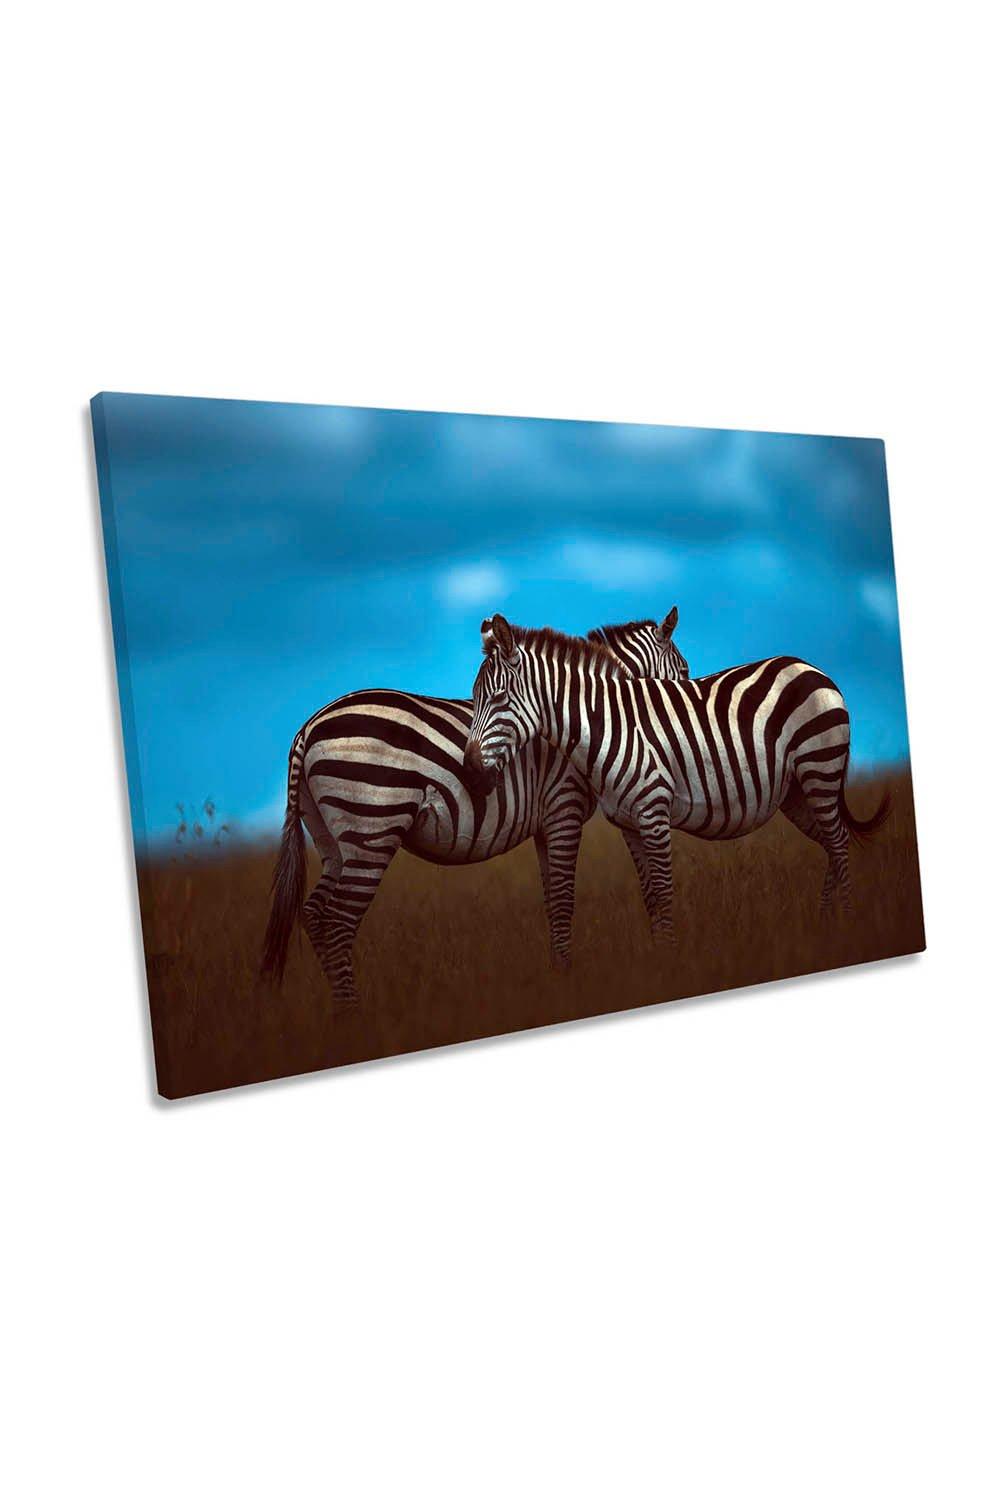 Stripey Zebras Blue Wildlife Canvas Wall Art Picture Print